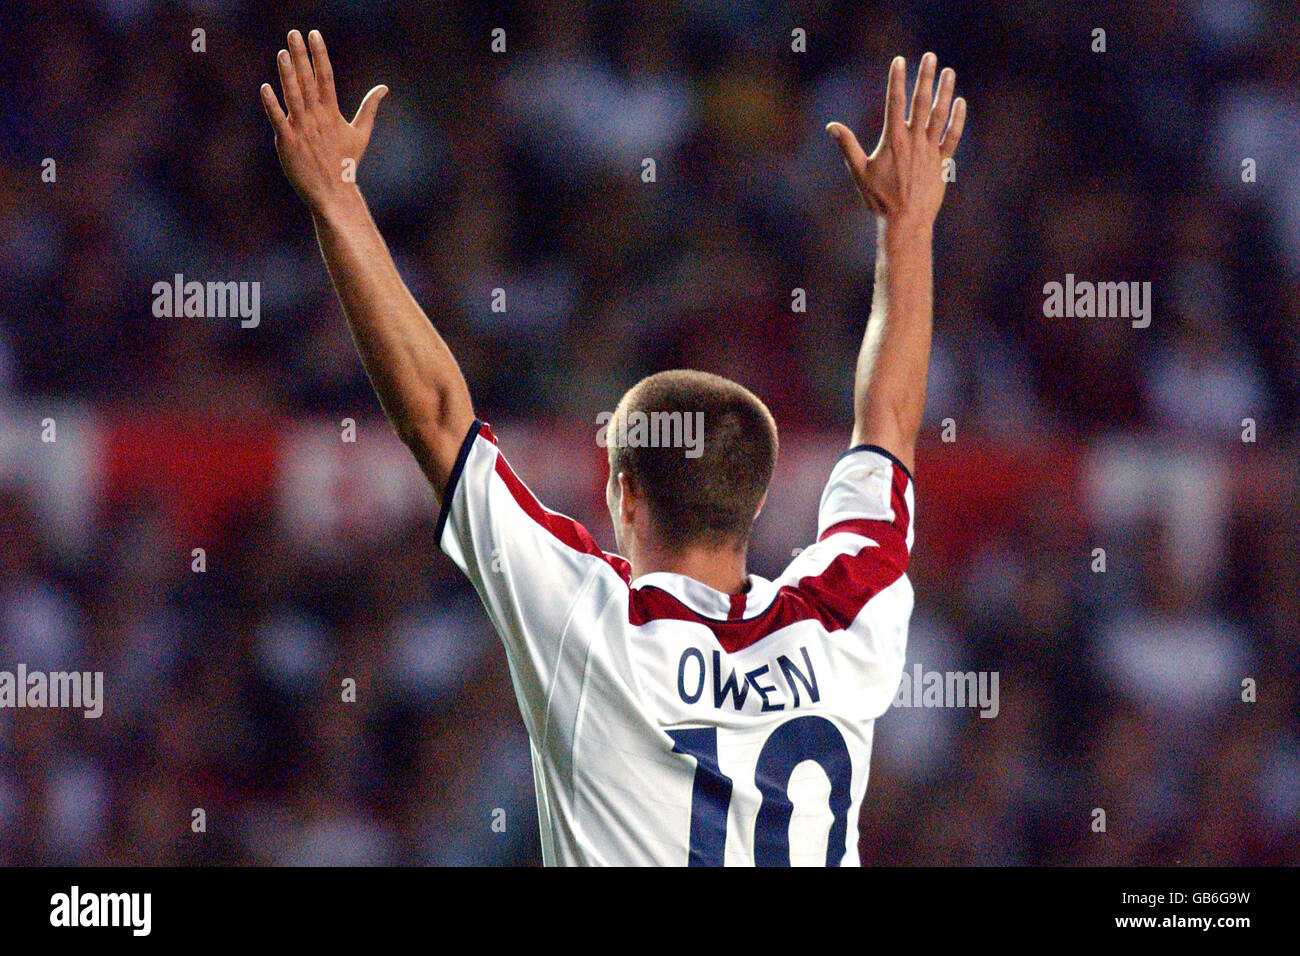 Soccer - Championnat d'Europe 2004 qualificateur - Groupe sept - Angleterre / Liechtenstein. Michael Owen, Angleterre Banque D'Images